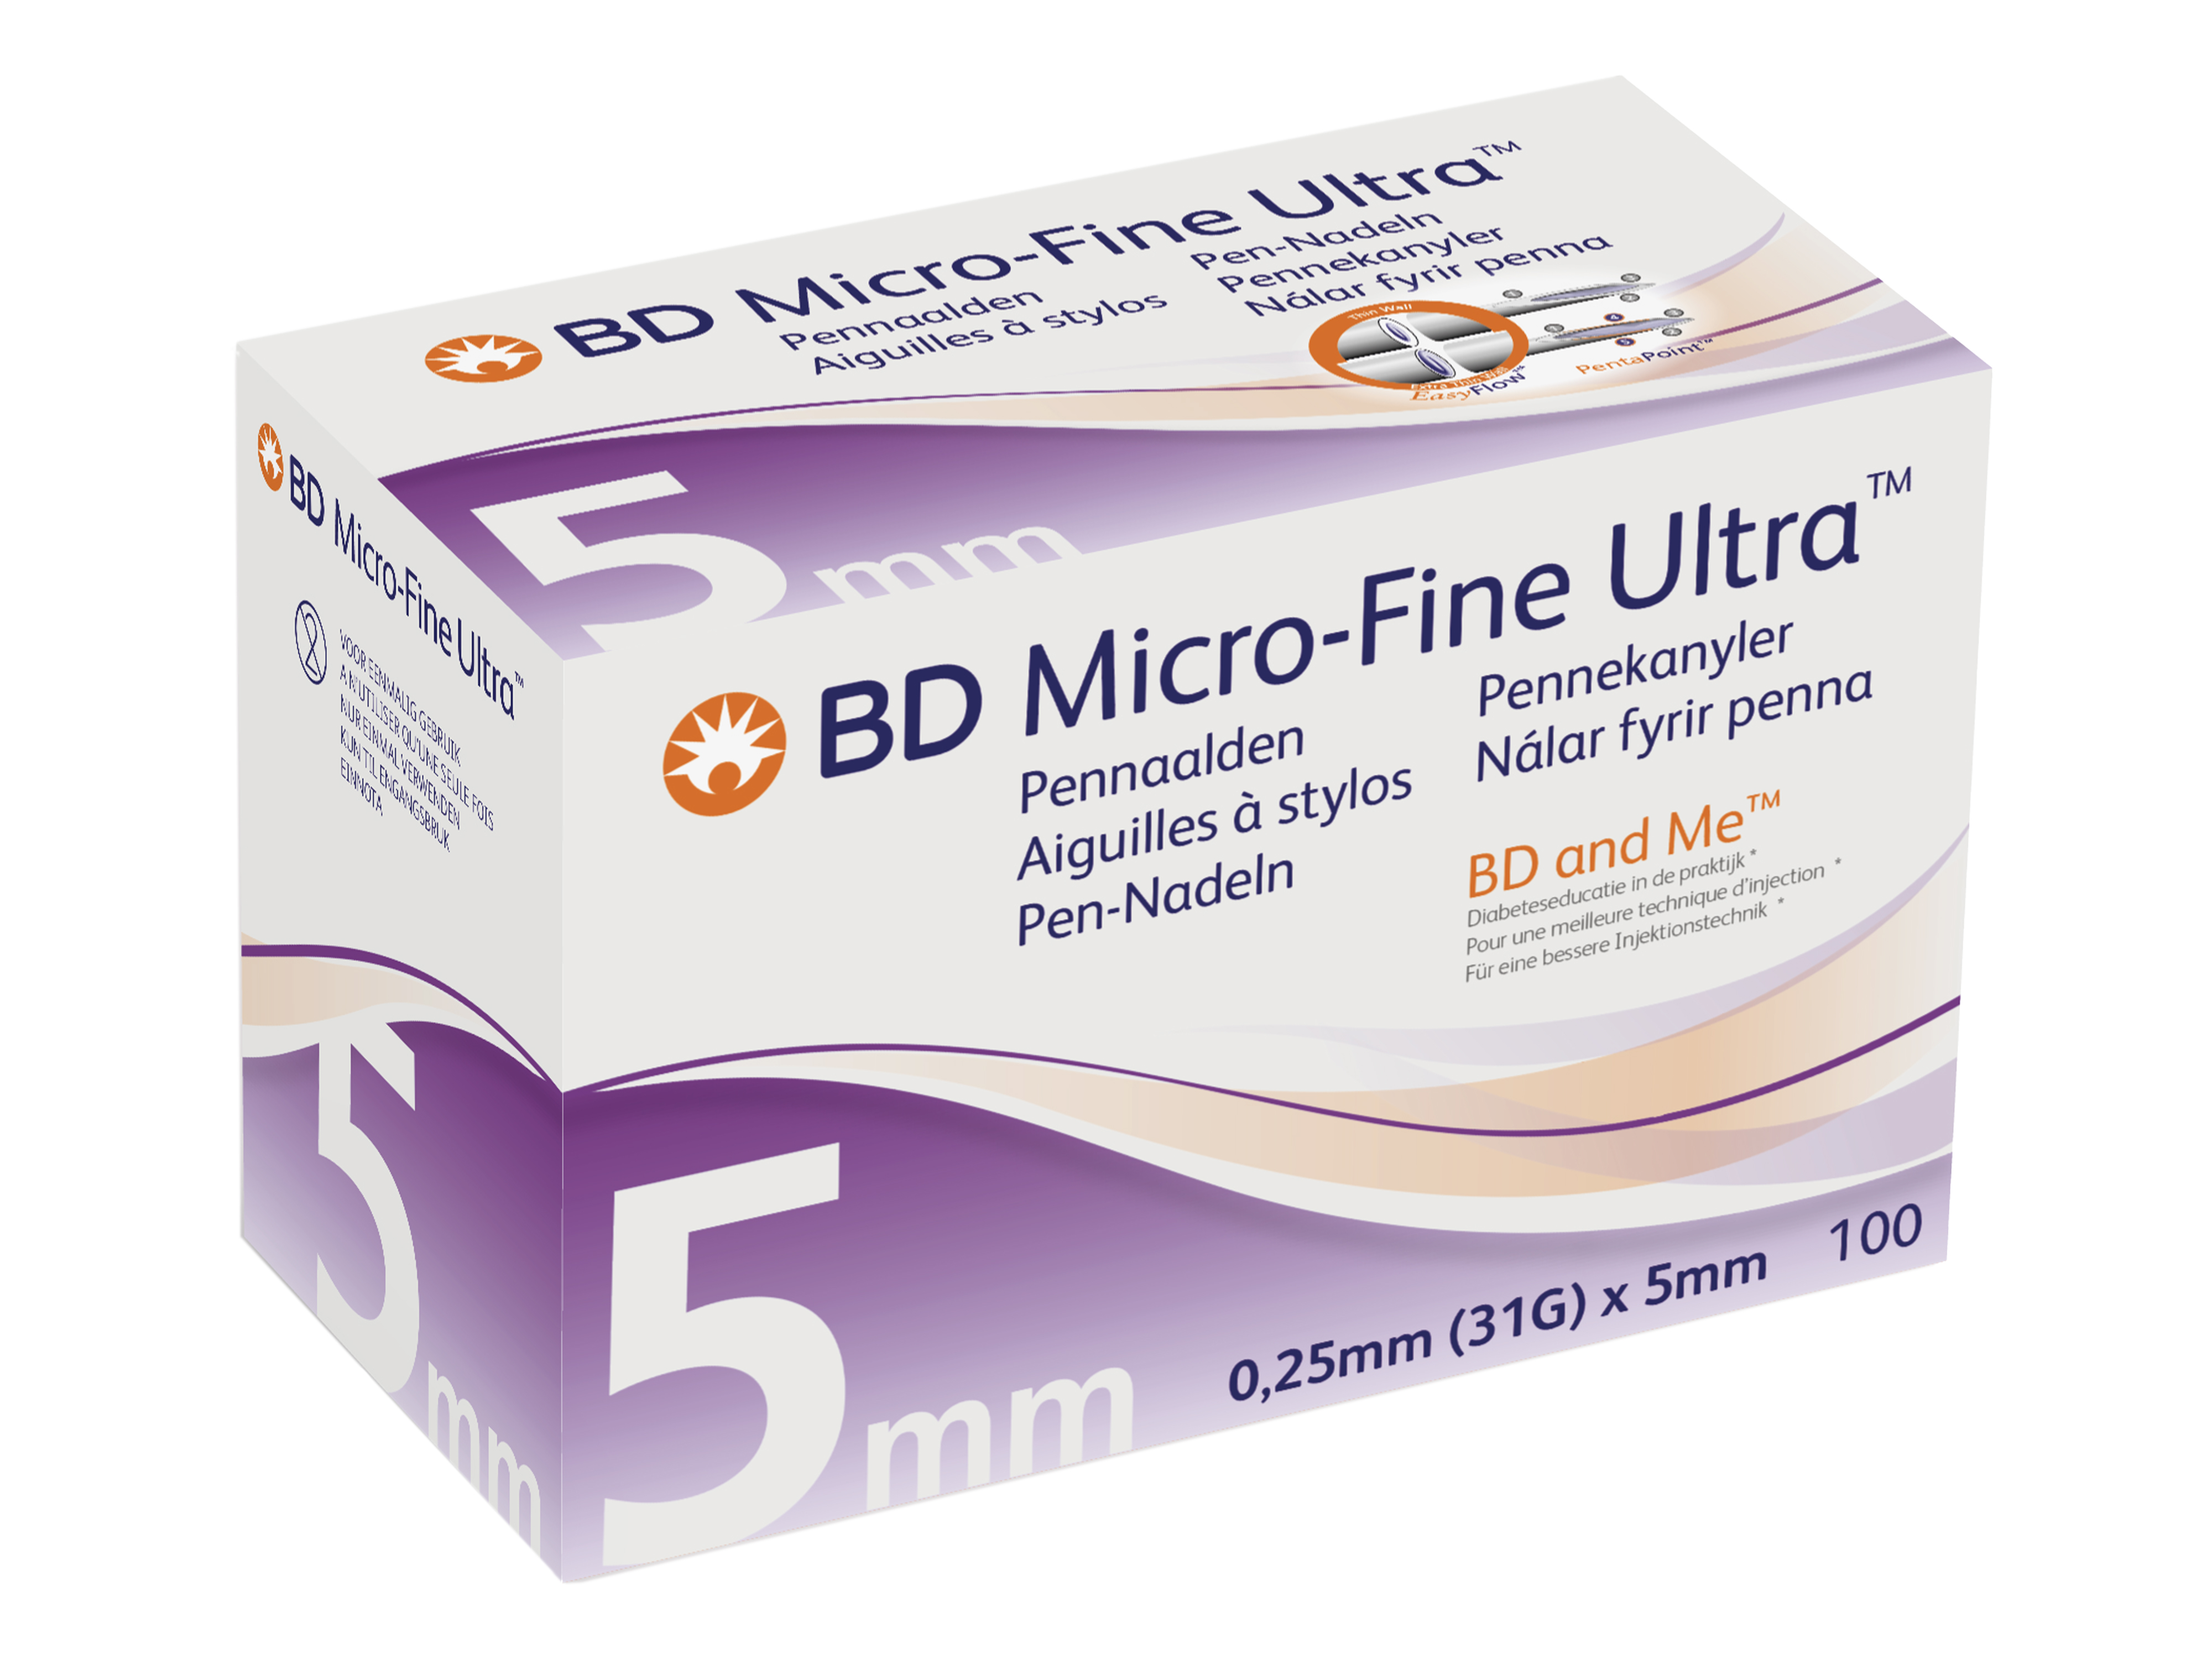 BD Micro-Fine Ultra, 5mm 31G, 100 stk.